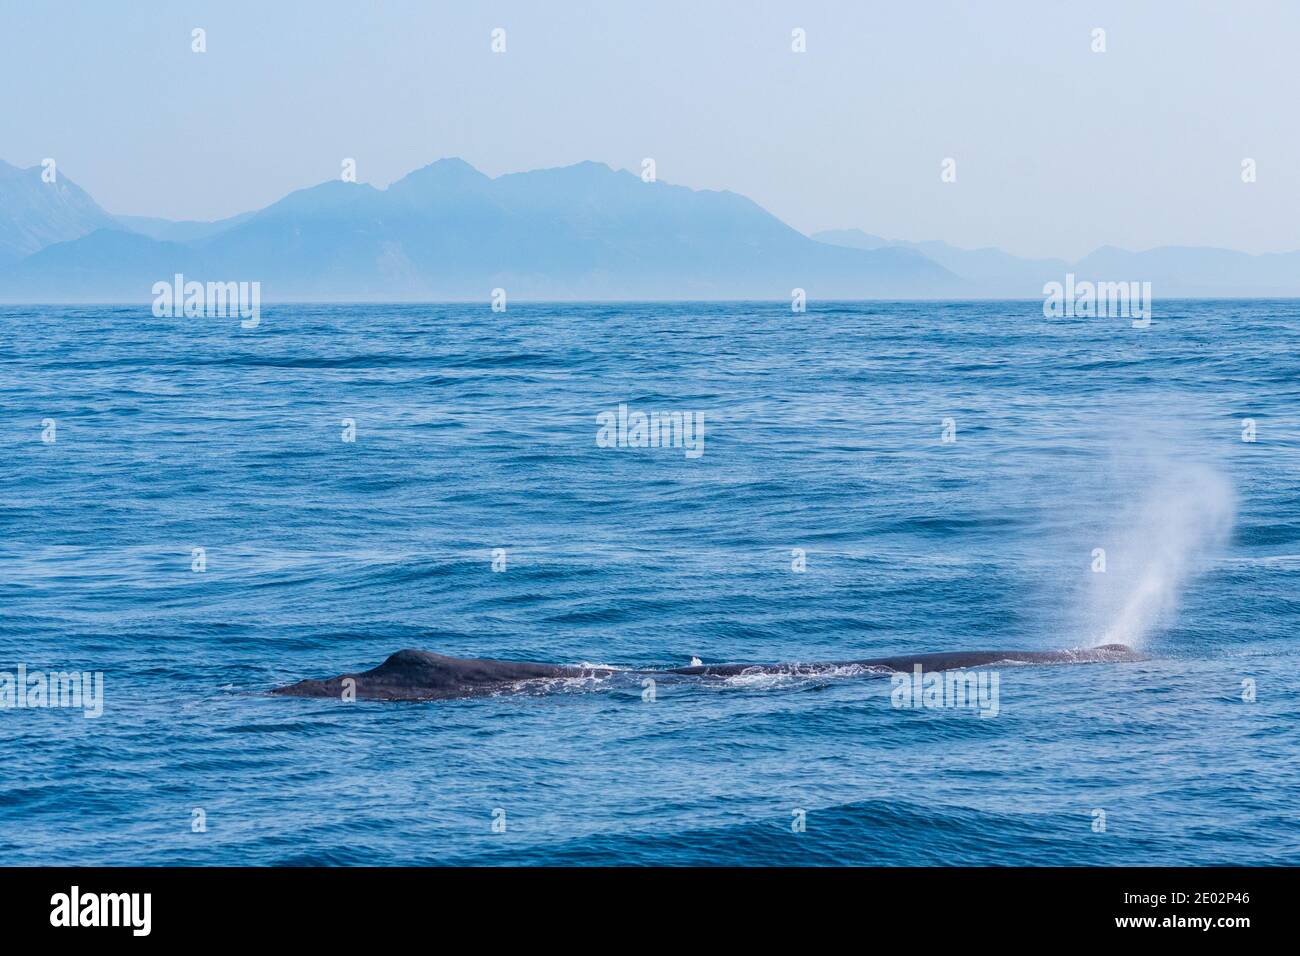 Sperm whale ready for diving near Kaikoura, New Zealand Stock Photo